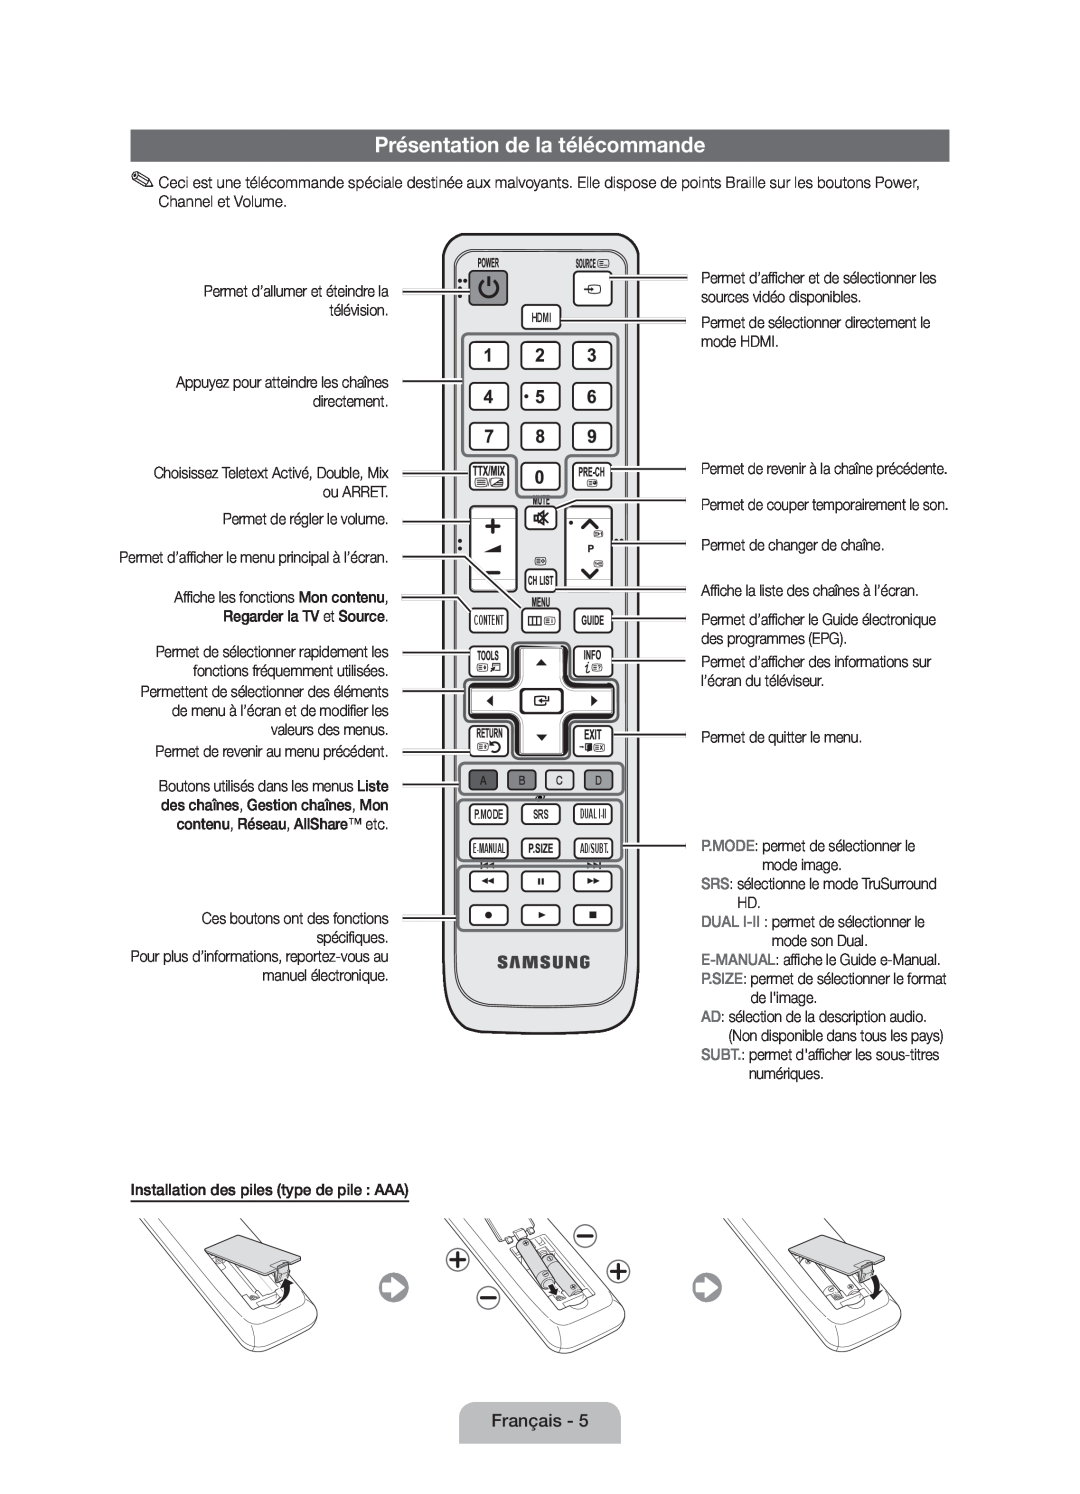 Samsung UE40D5000PWXXC, UE46D5000PWXZG, UE40D5000PWXXH, UE32D5000PWXXC, UE46D5000PWXXC manual Présentation de la télécommande 